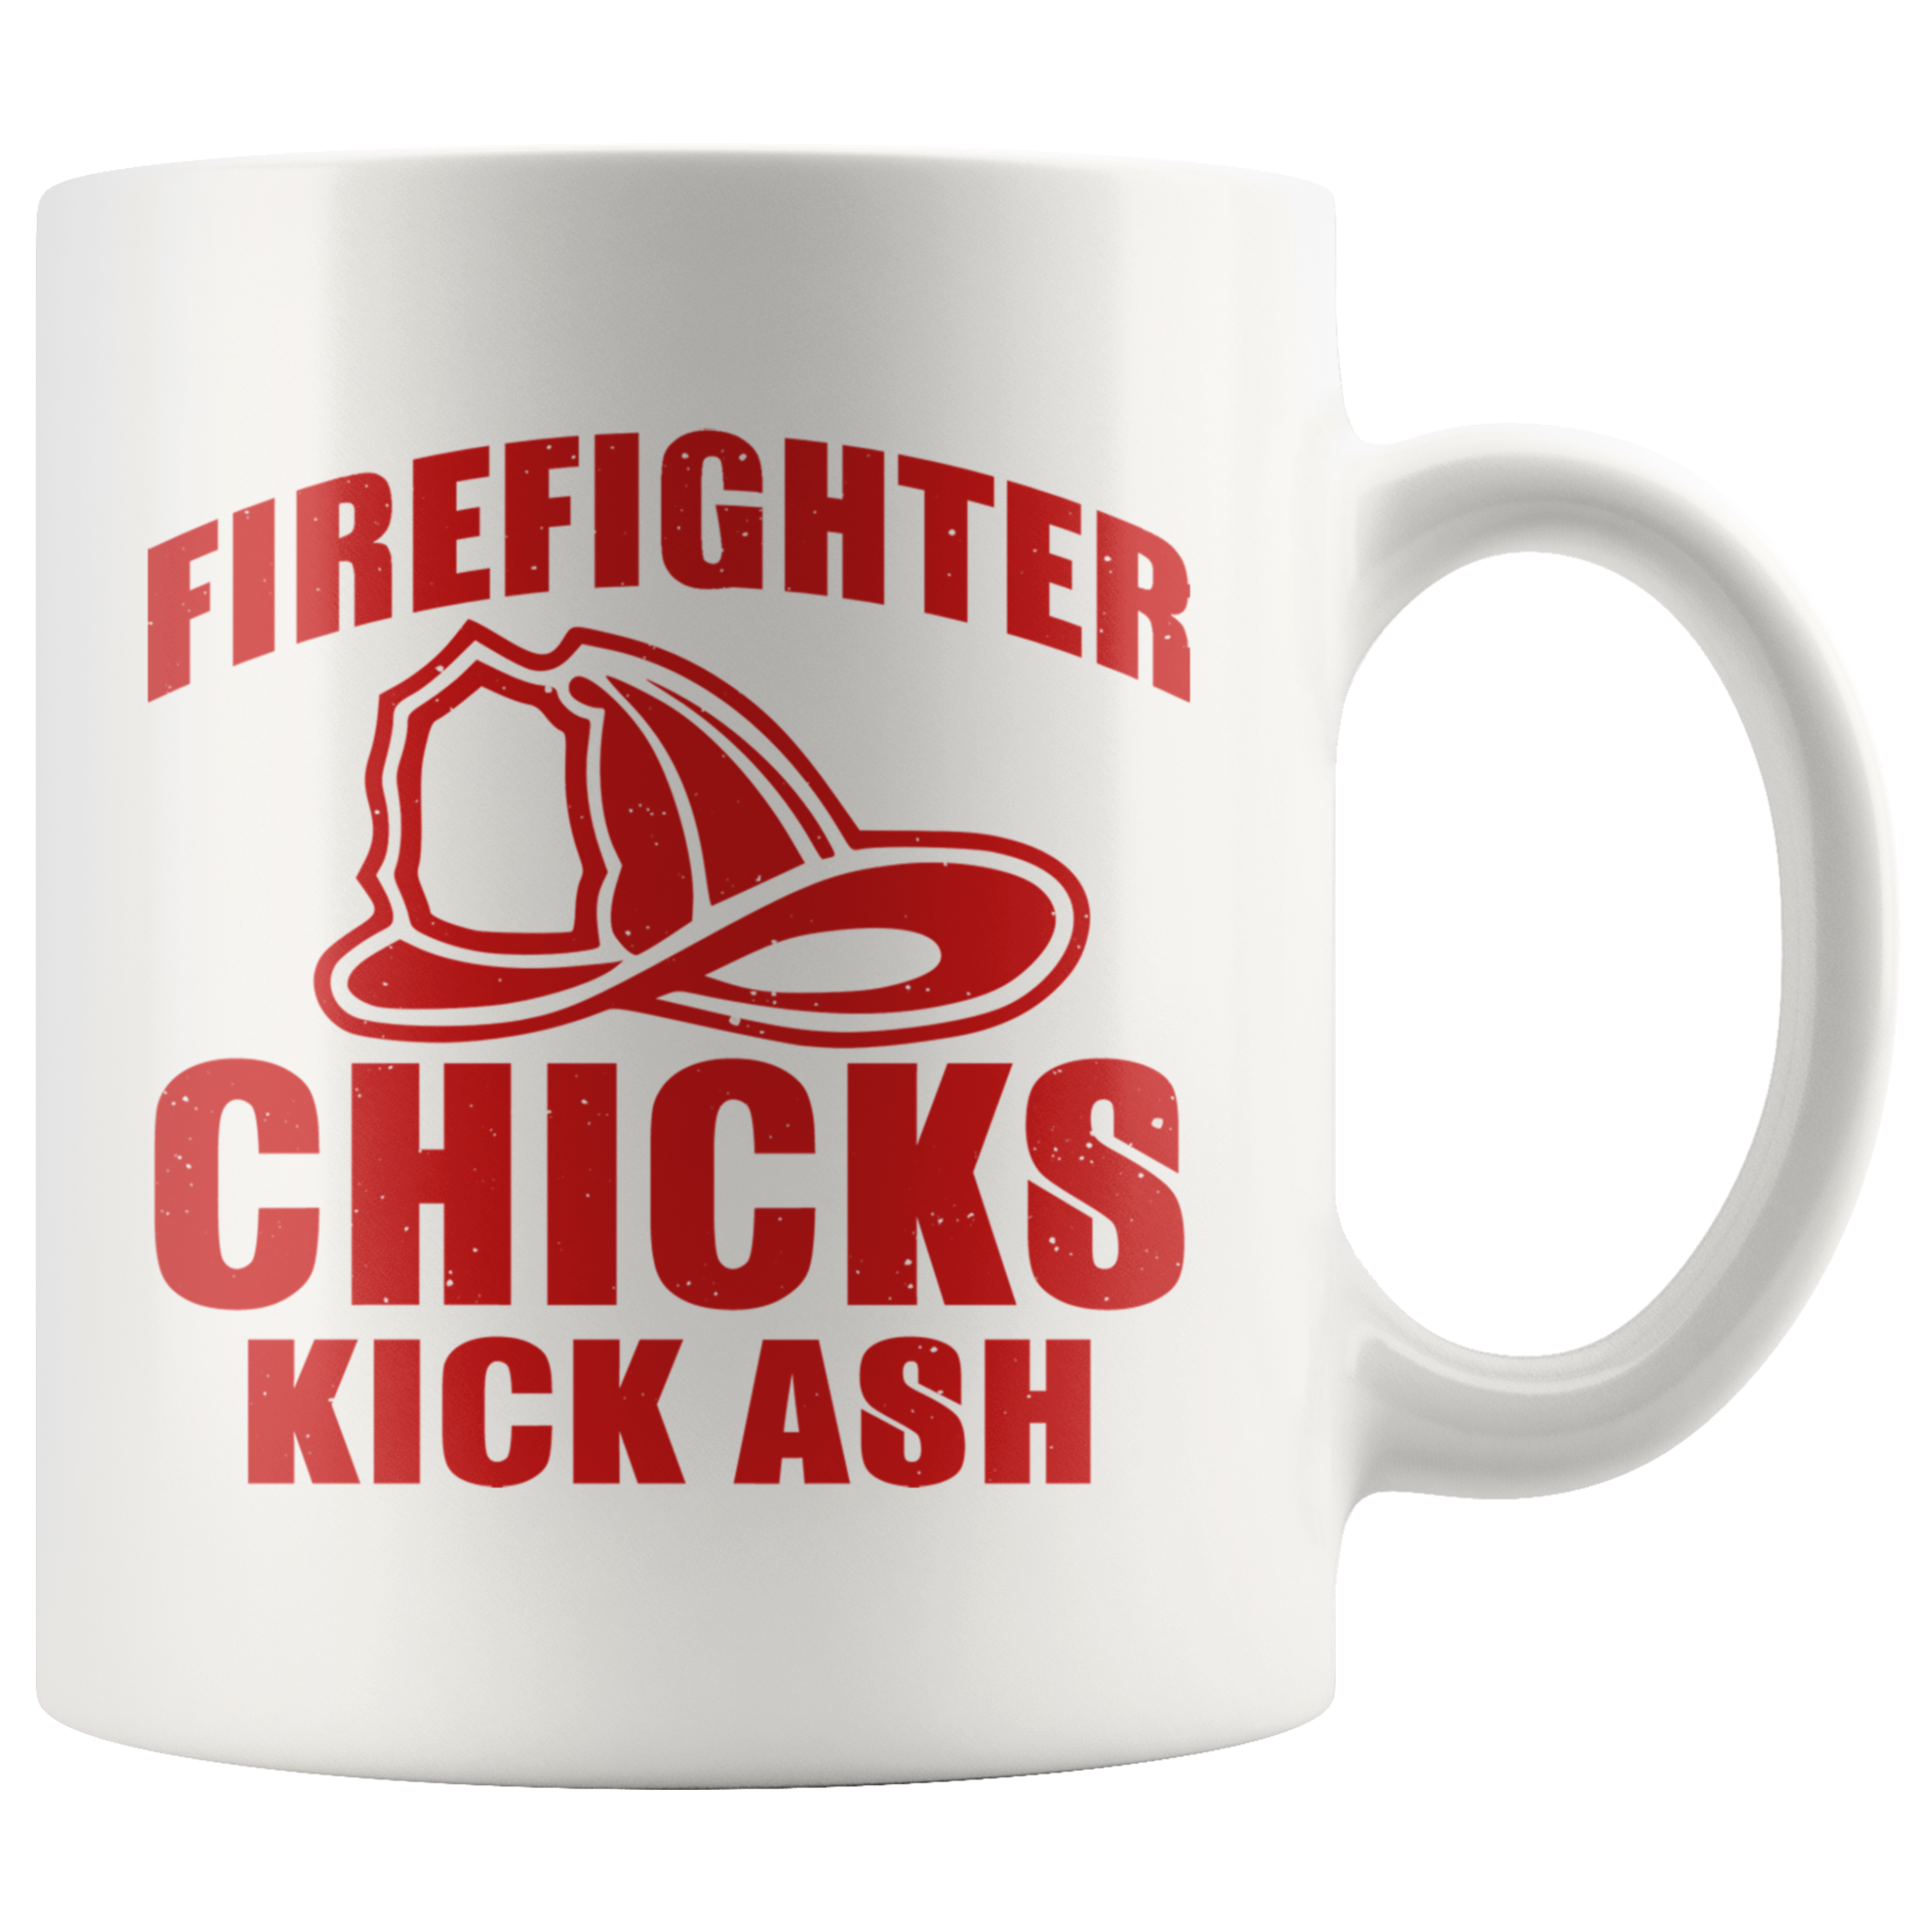 Funny Firefighter Mug